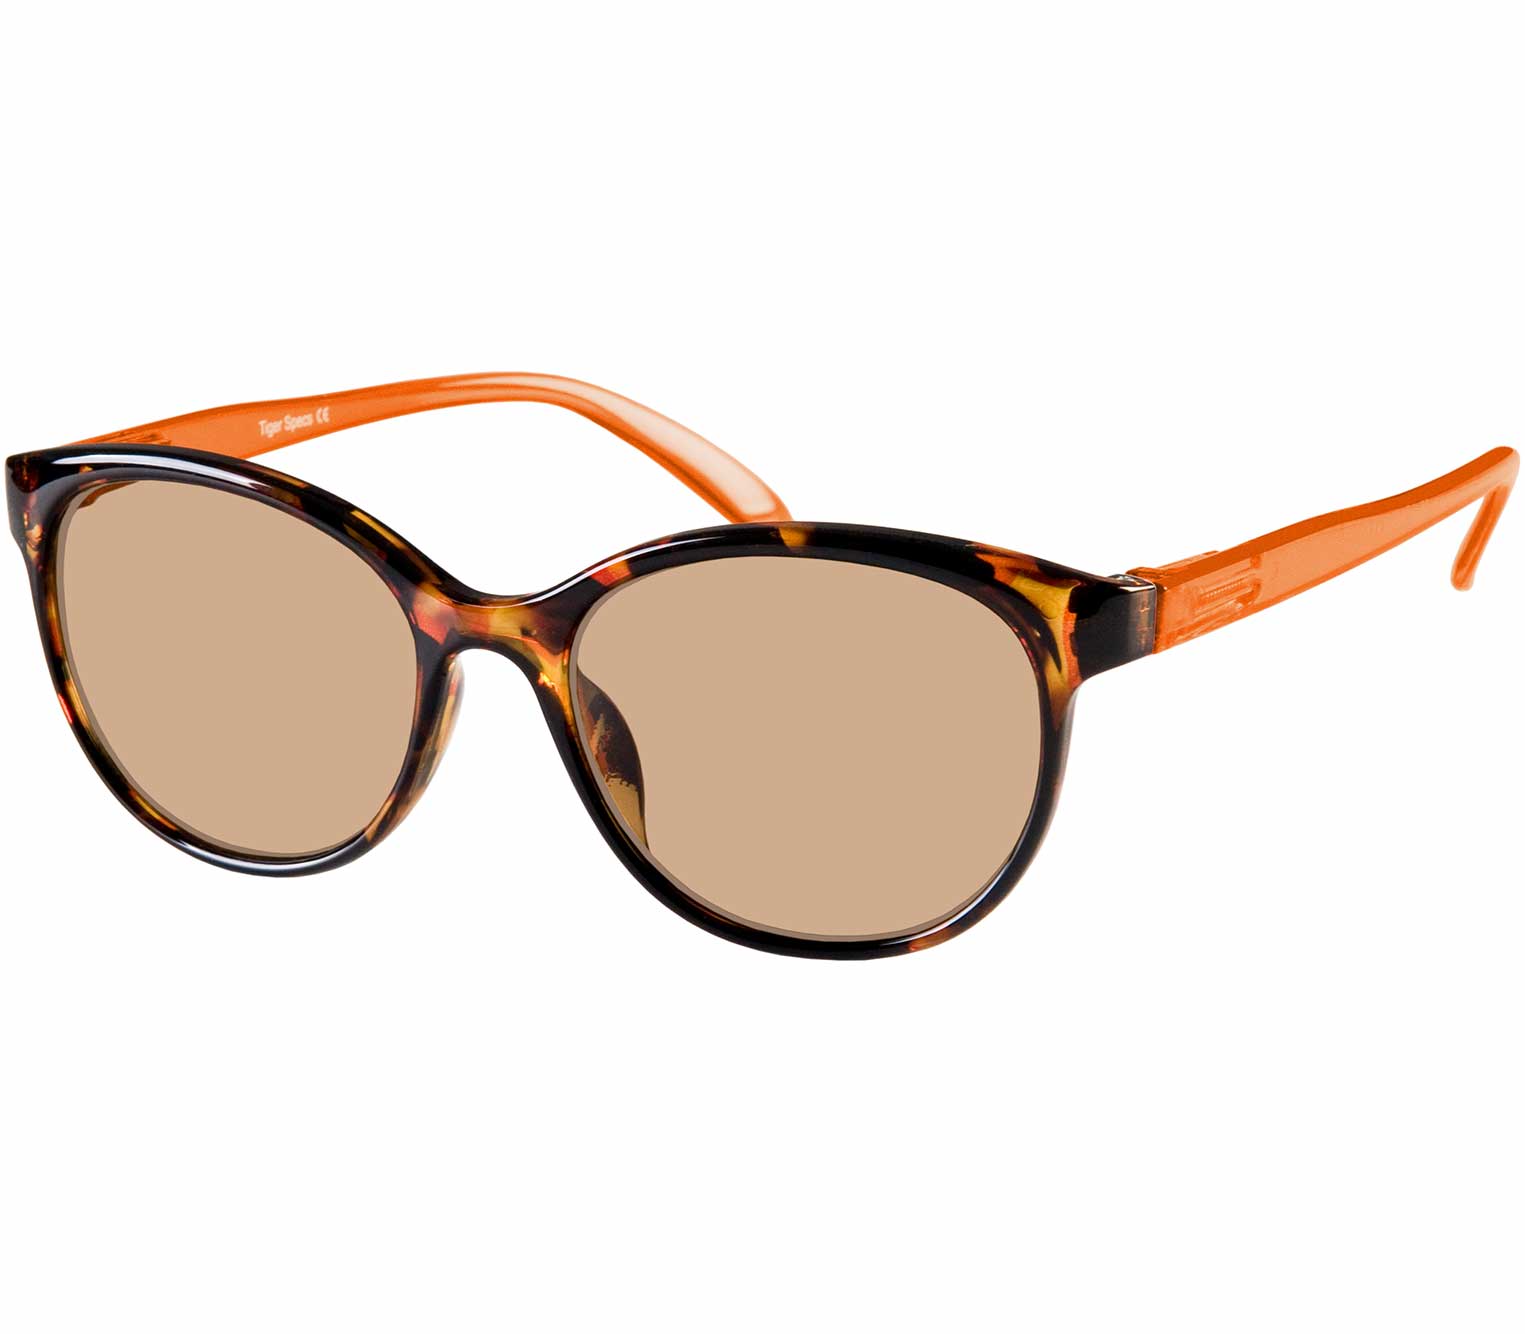 Main Image (Angle) - Naomi (Orange) Sunglasses